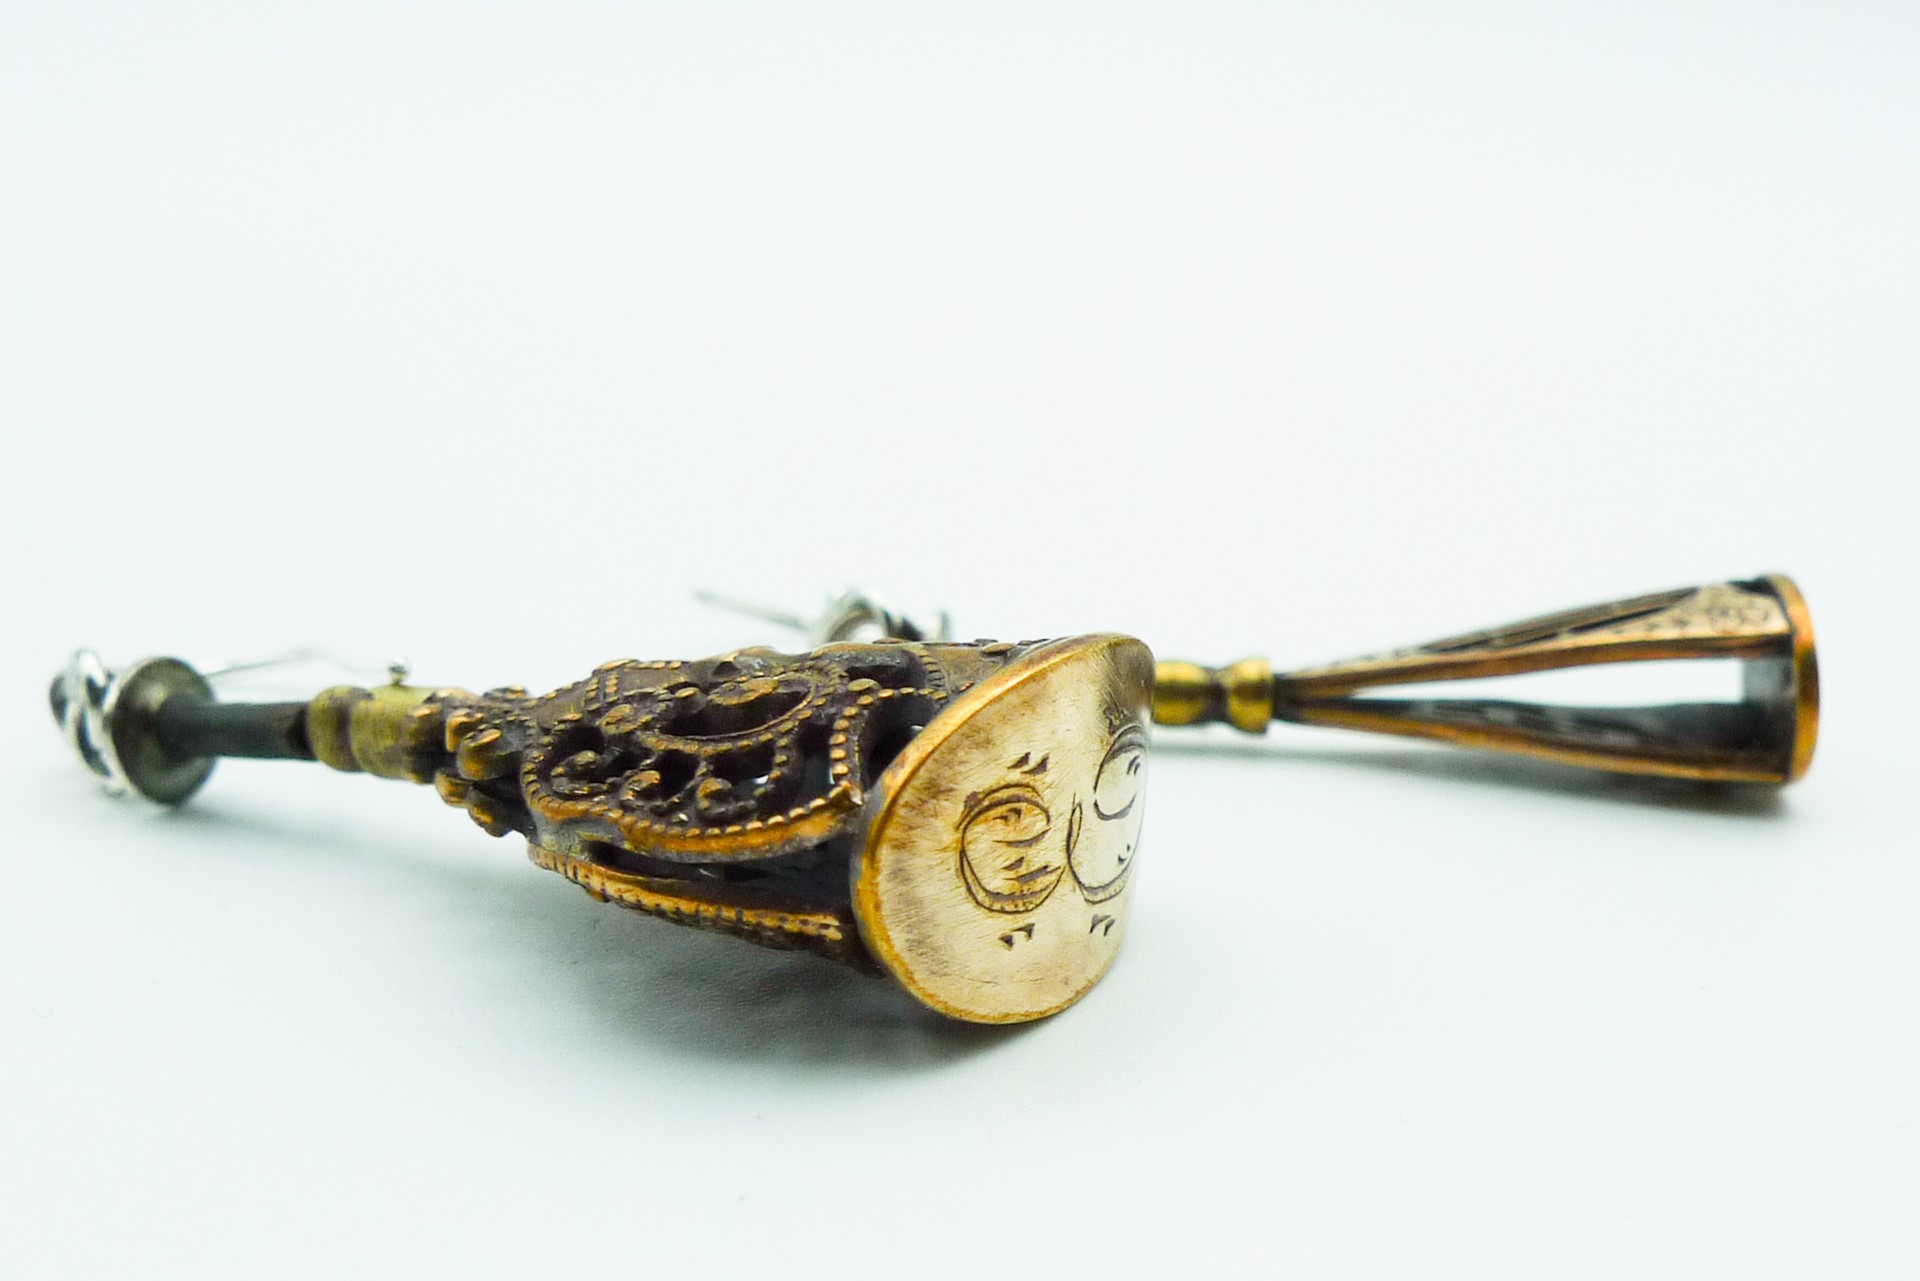 E & B Antique Hat Pin Adornments by Ali Kauss